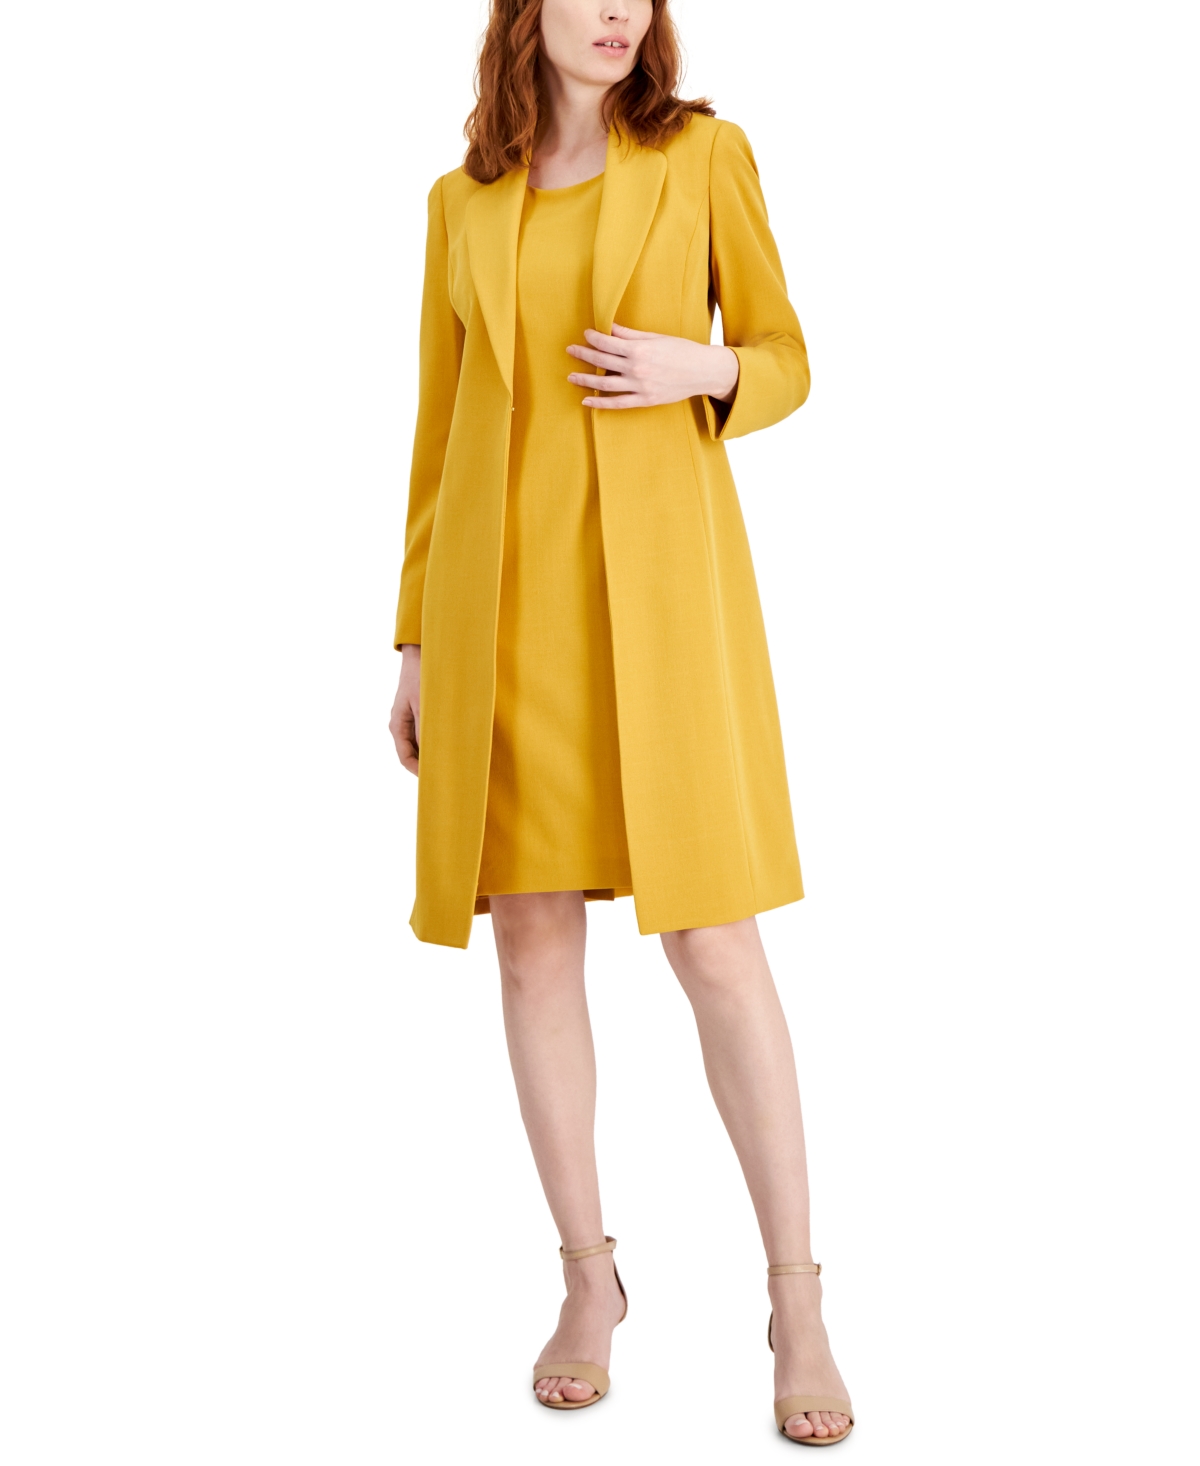 Women's Crepe Topper Jacket & Sheath Dress Suit, Regular and Petite Sizes - Harvest Gold